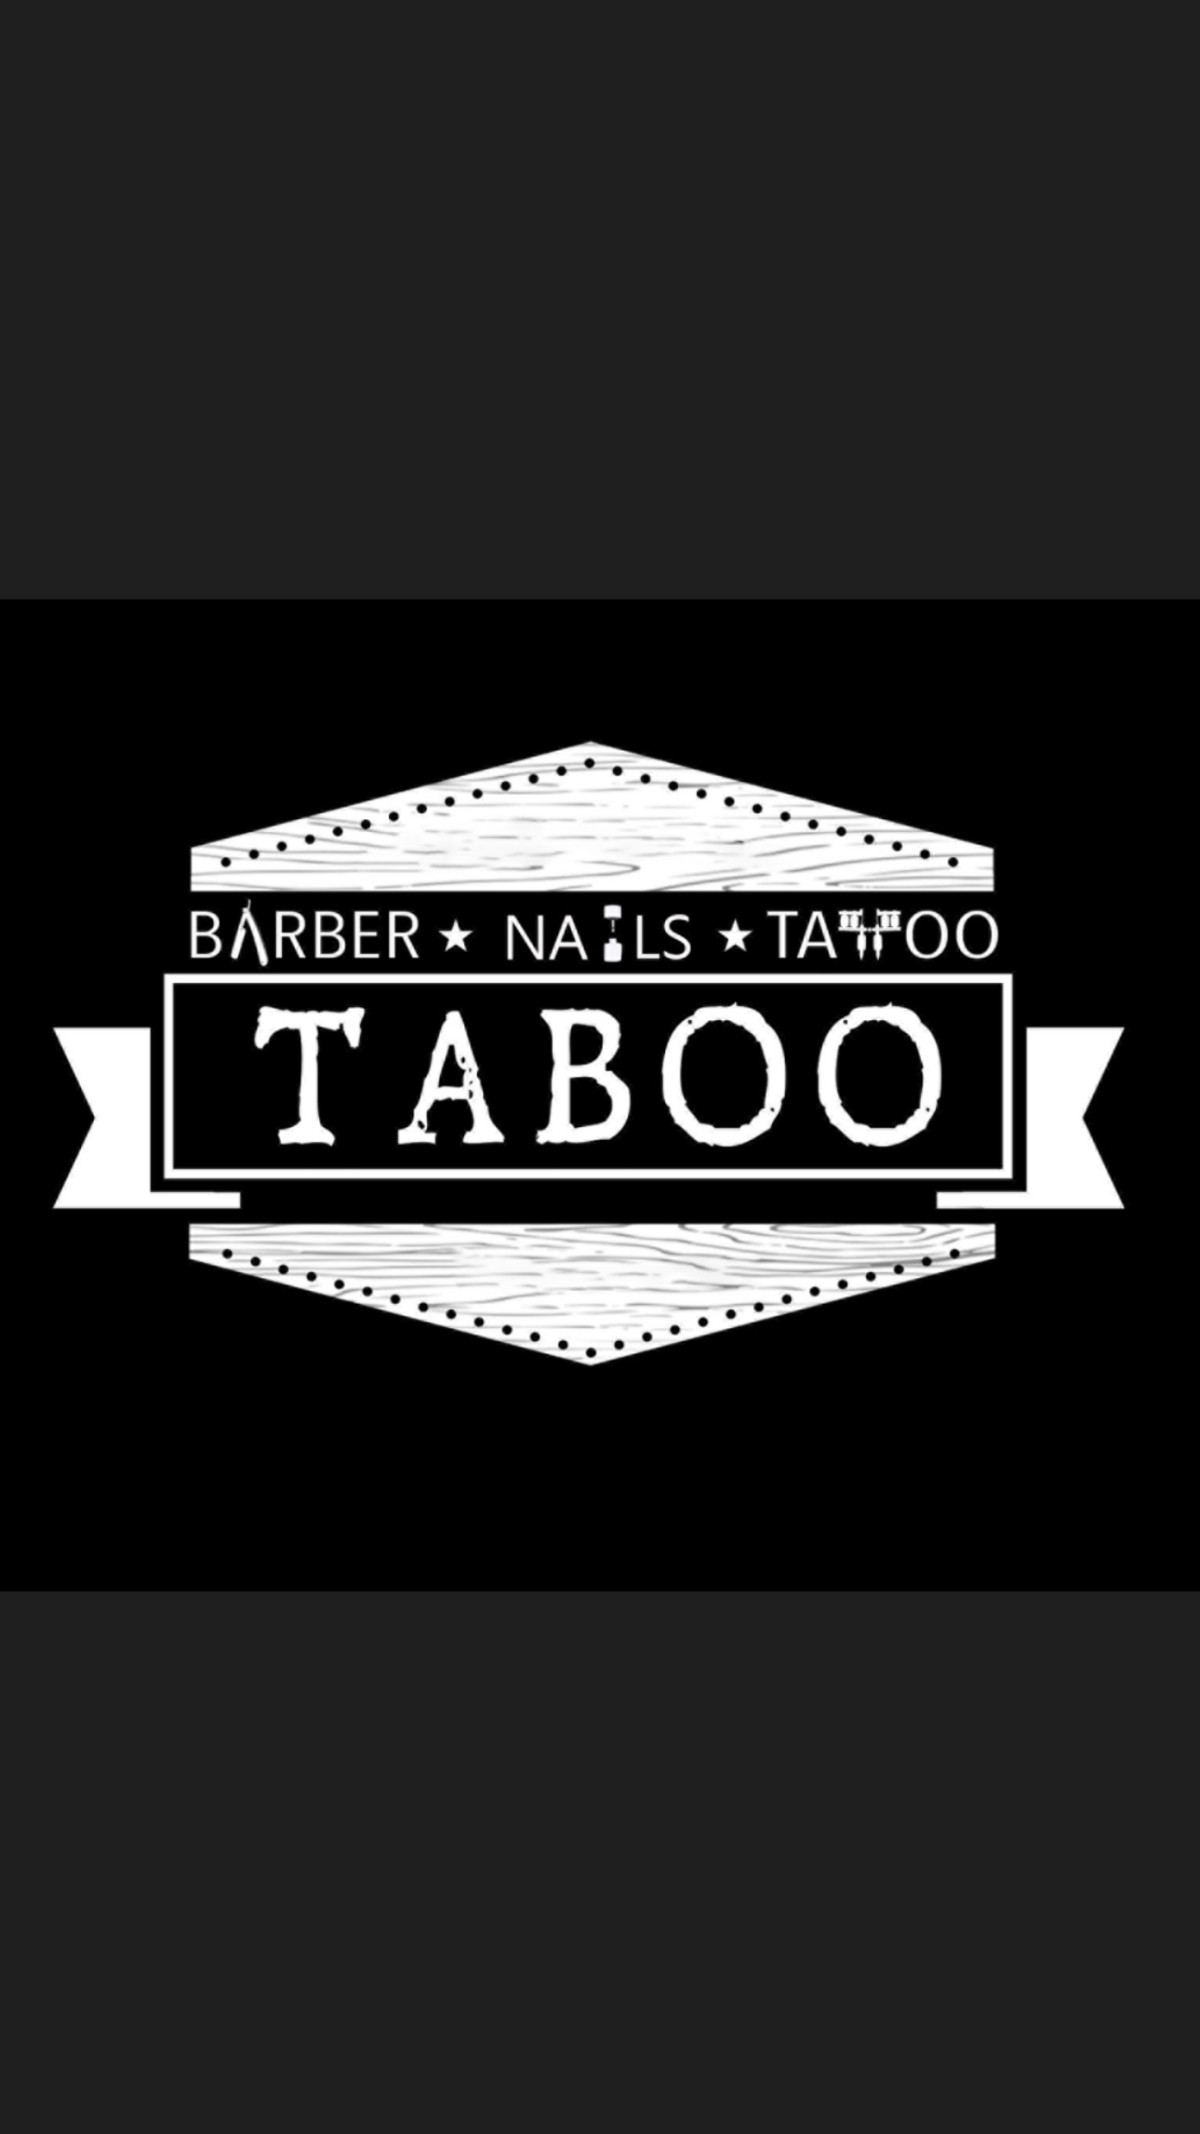 Taboo Salon Budapest - Fodrászat